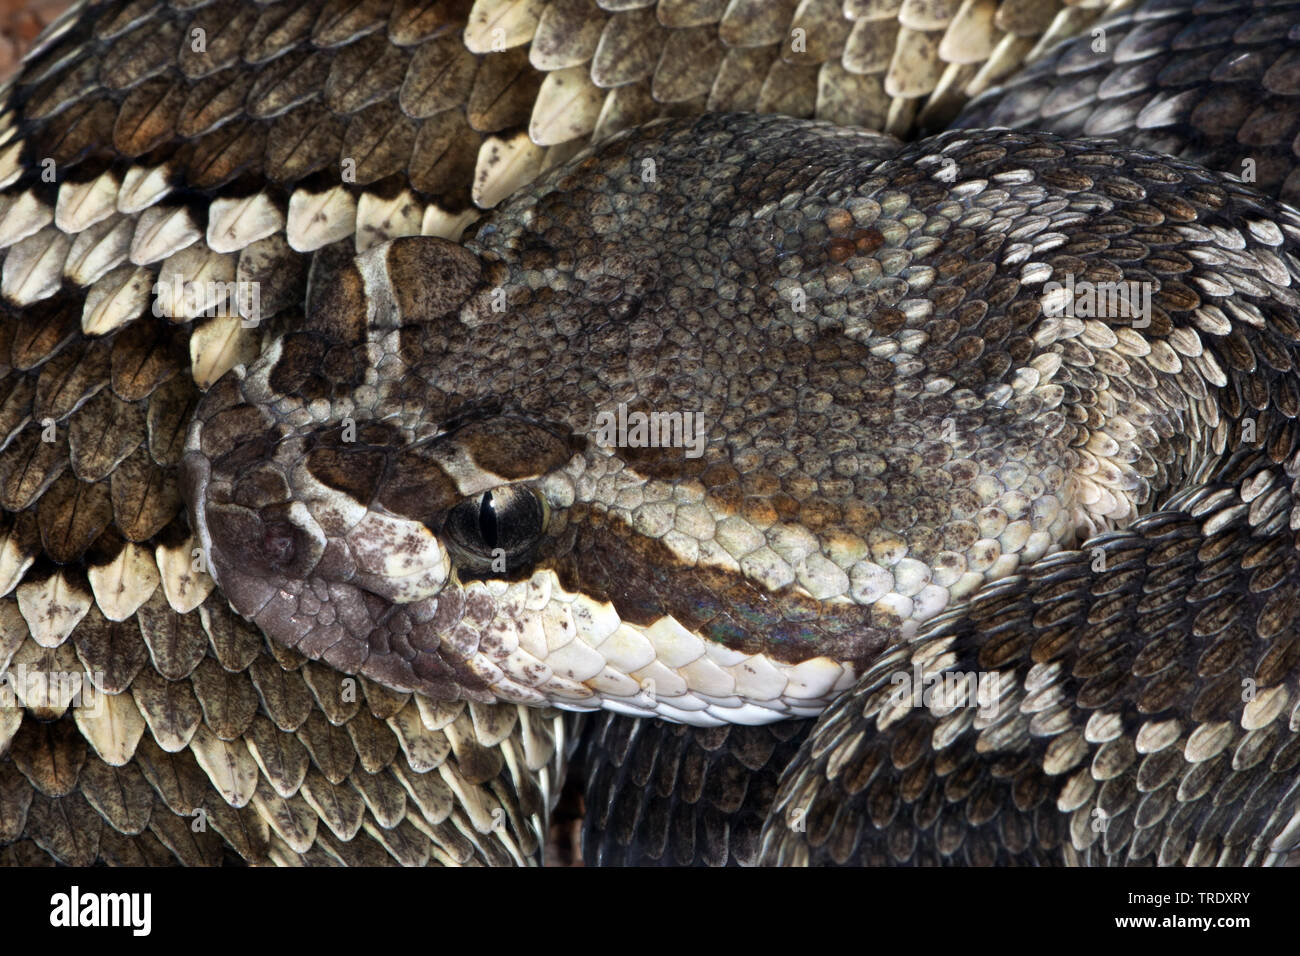 Western rattlesnake, Coronado Island Rattlesnake  (Crotalus viridis), portrait, Mexico, Baja California, Isla Coronado del Sur Stock Photo